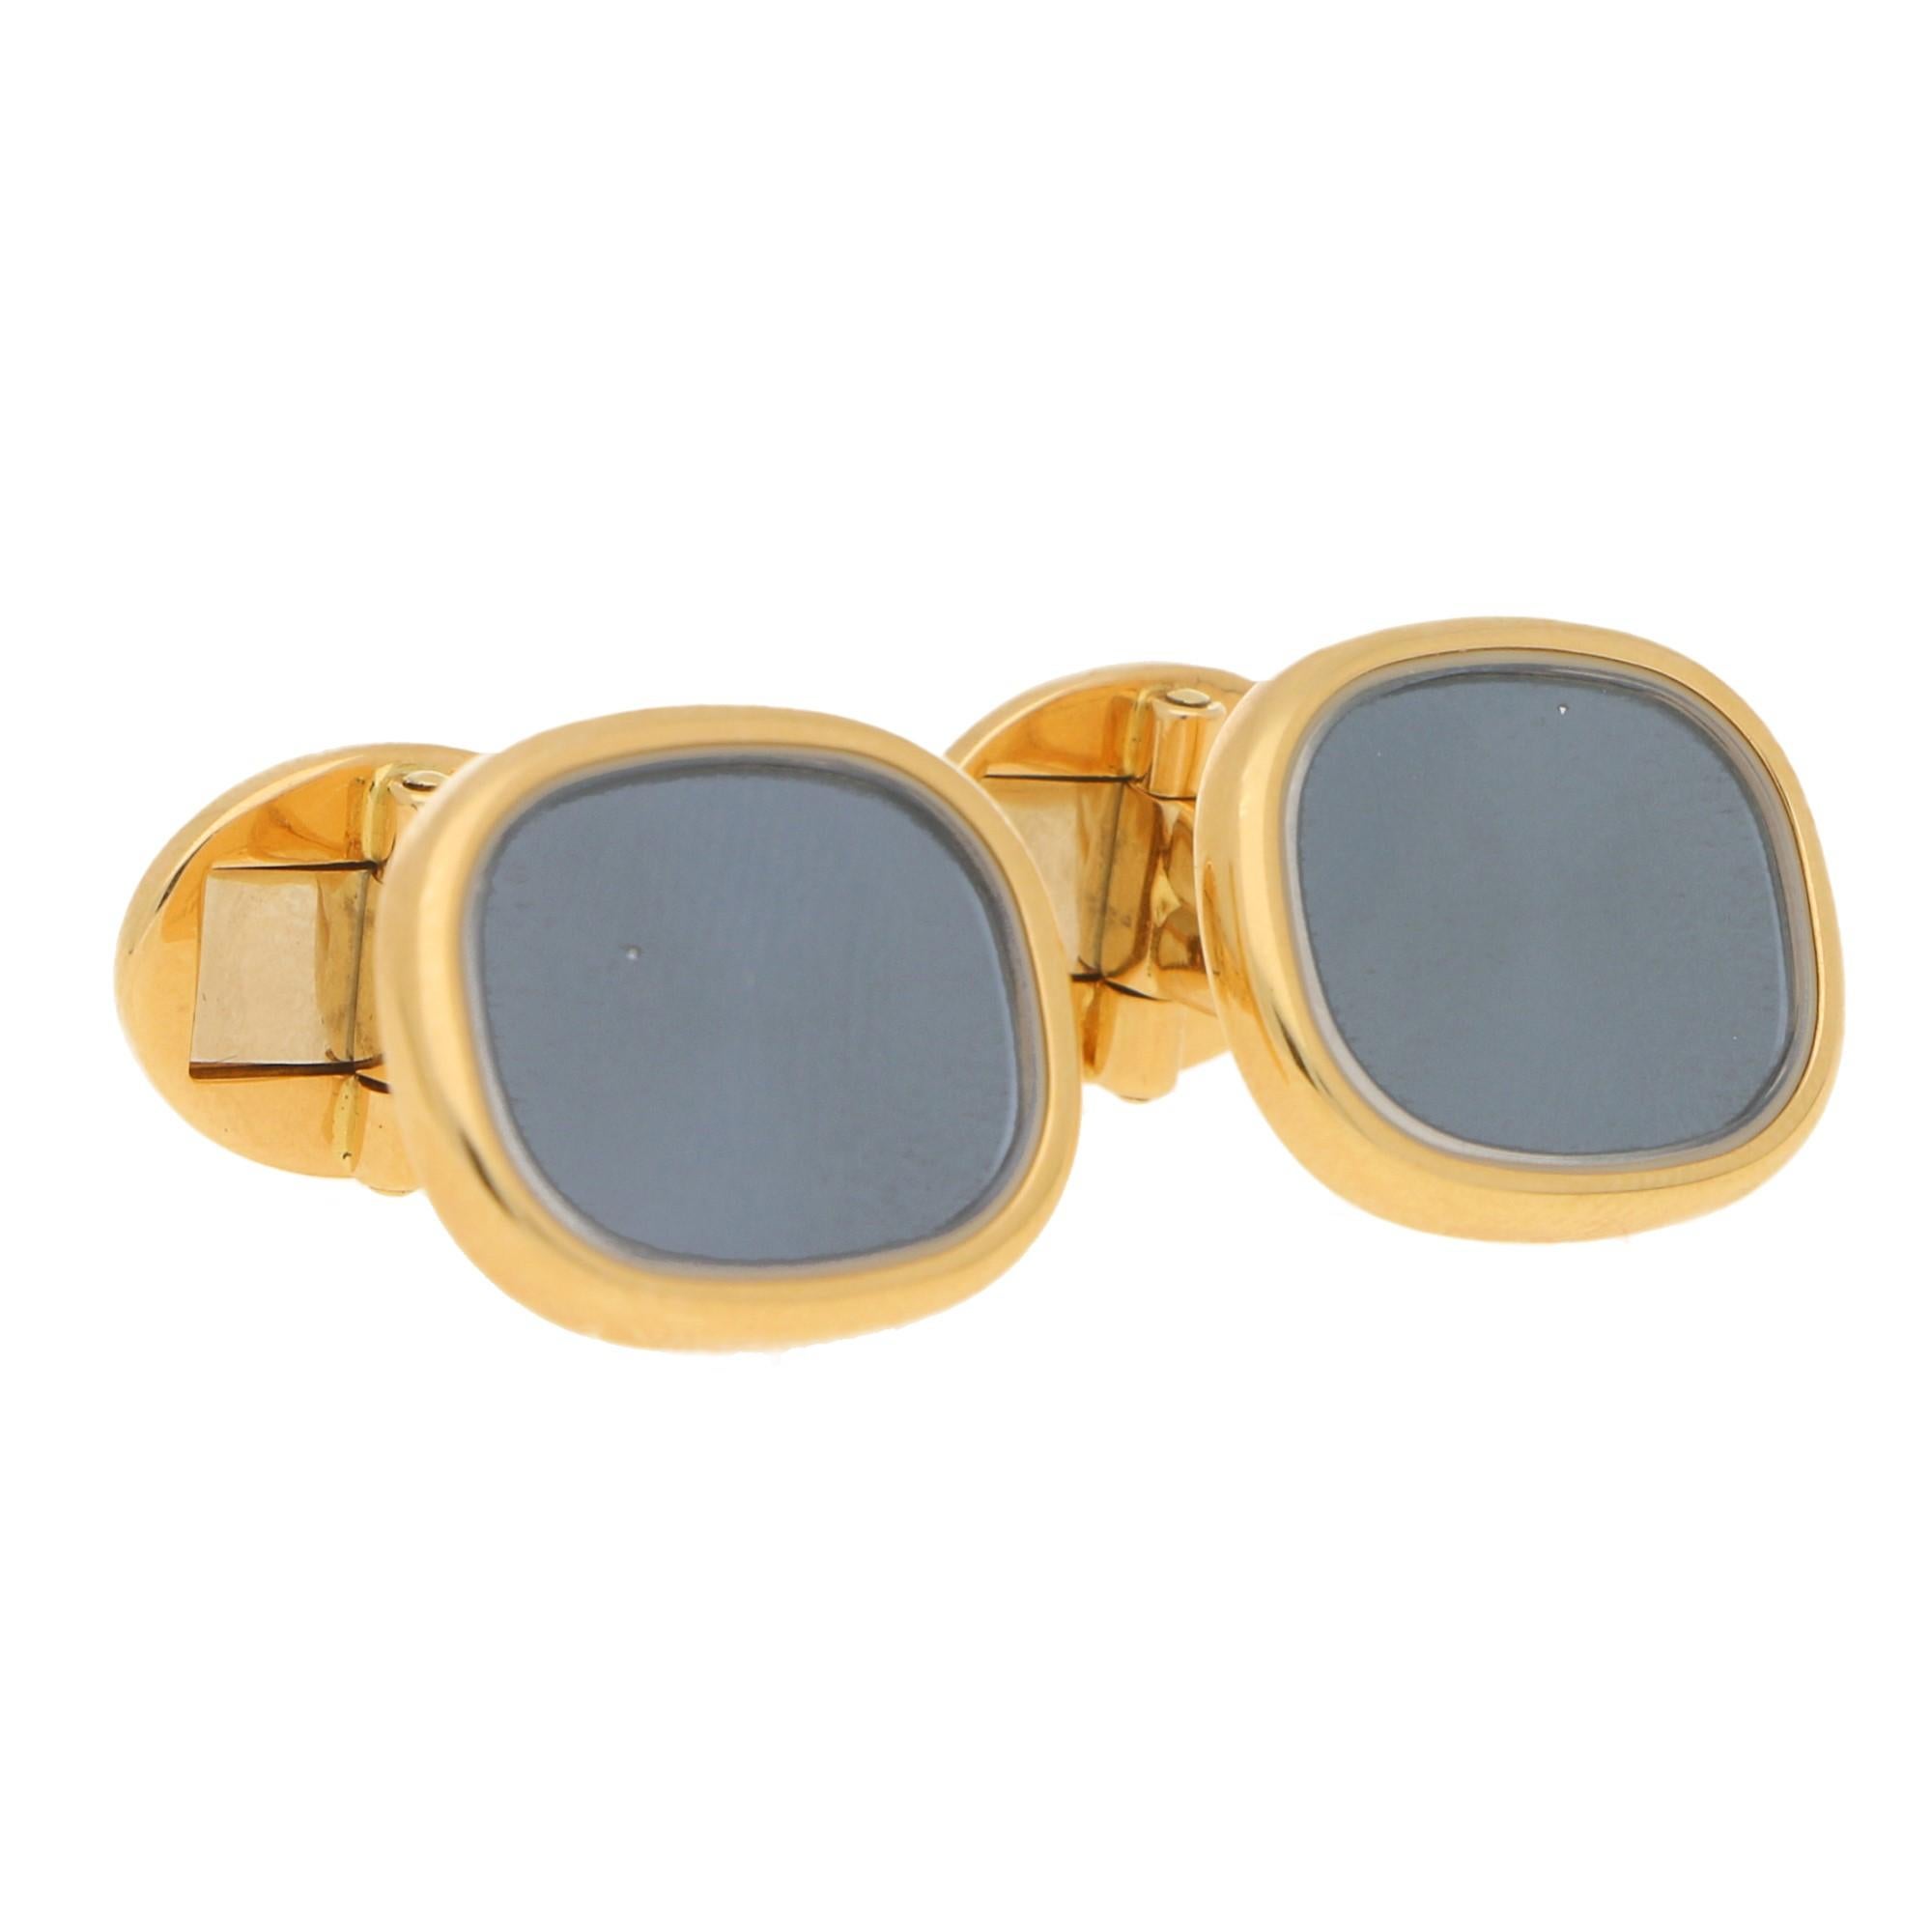 Vintage Patek Phillippe Ellipse Watch and Matching Cufflinks in 18k Yellow Gold 2